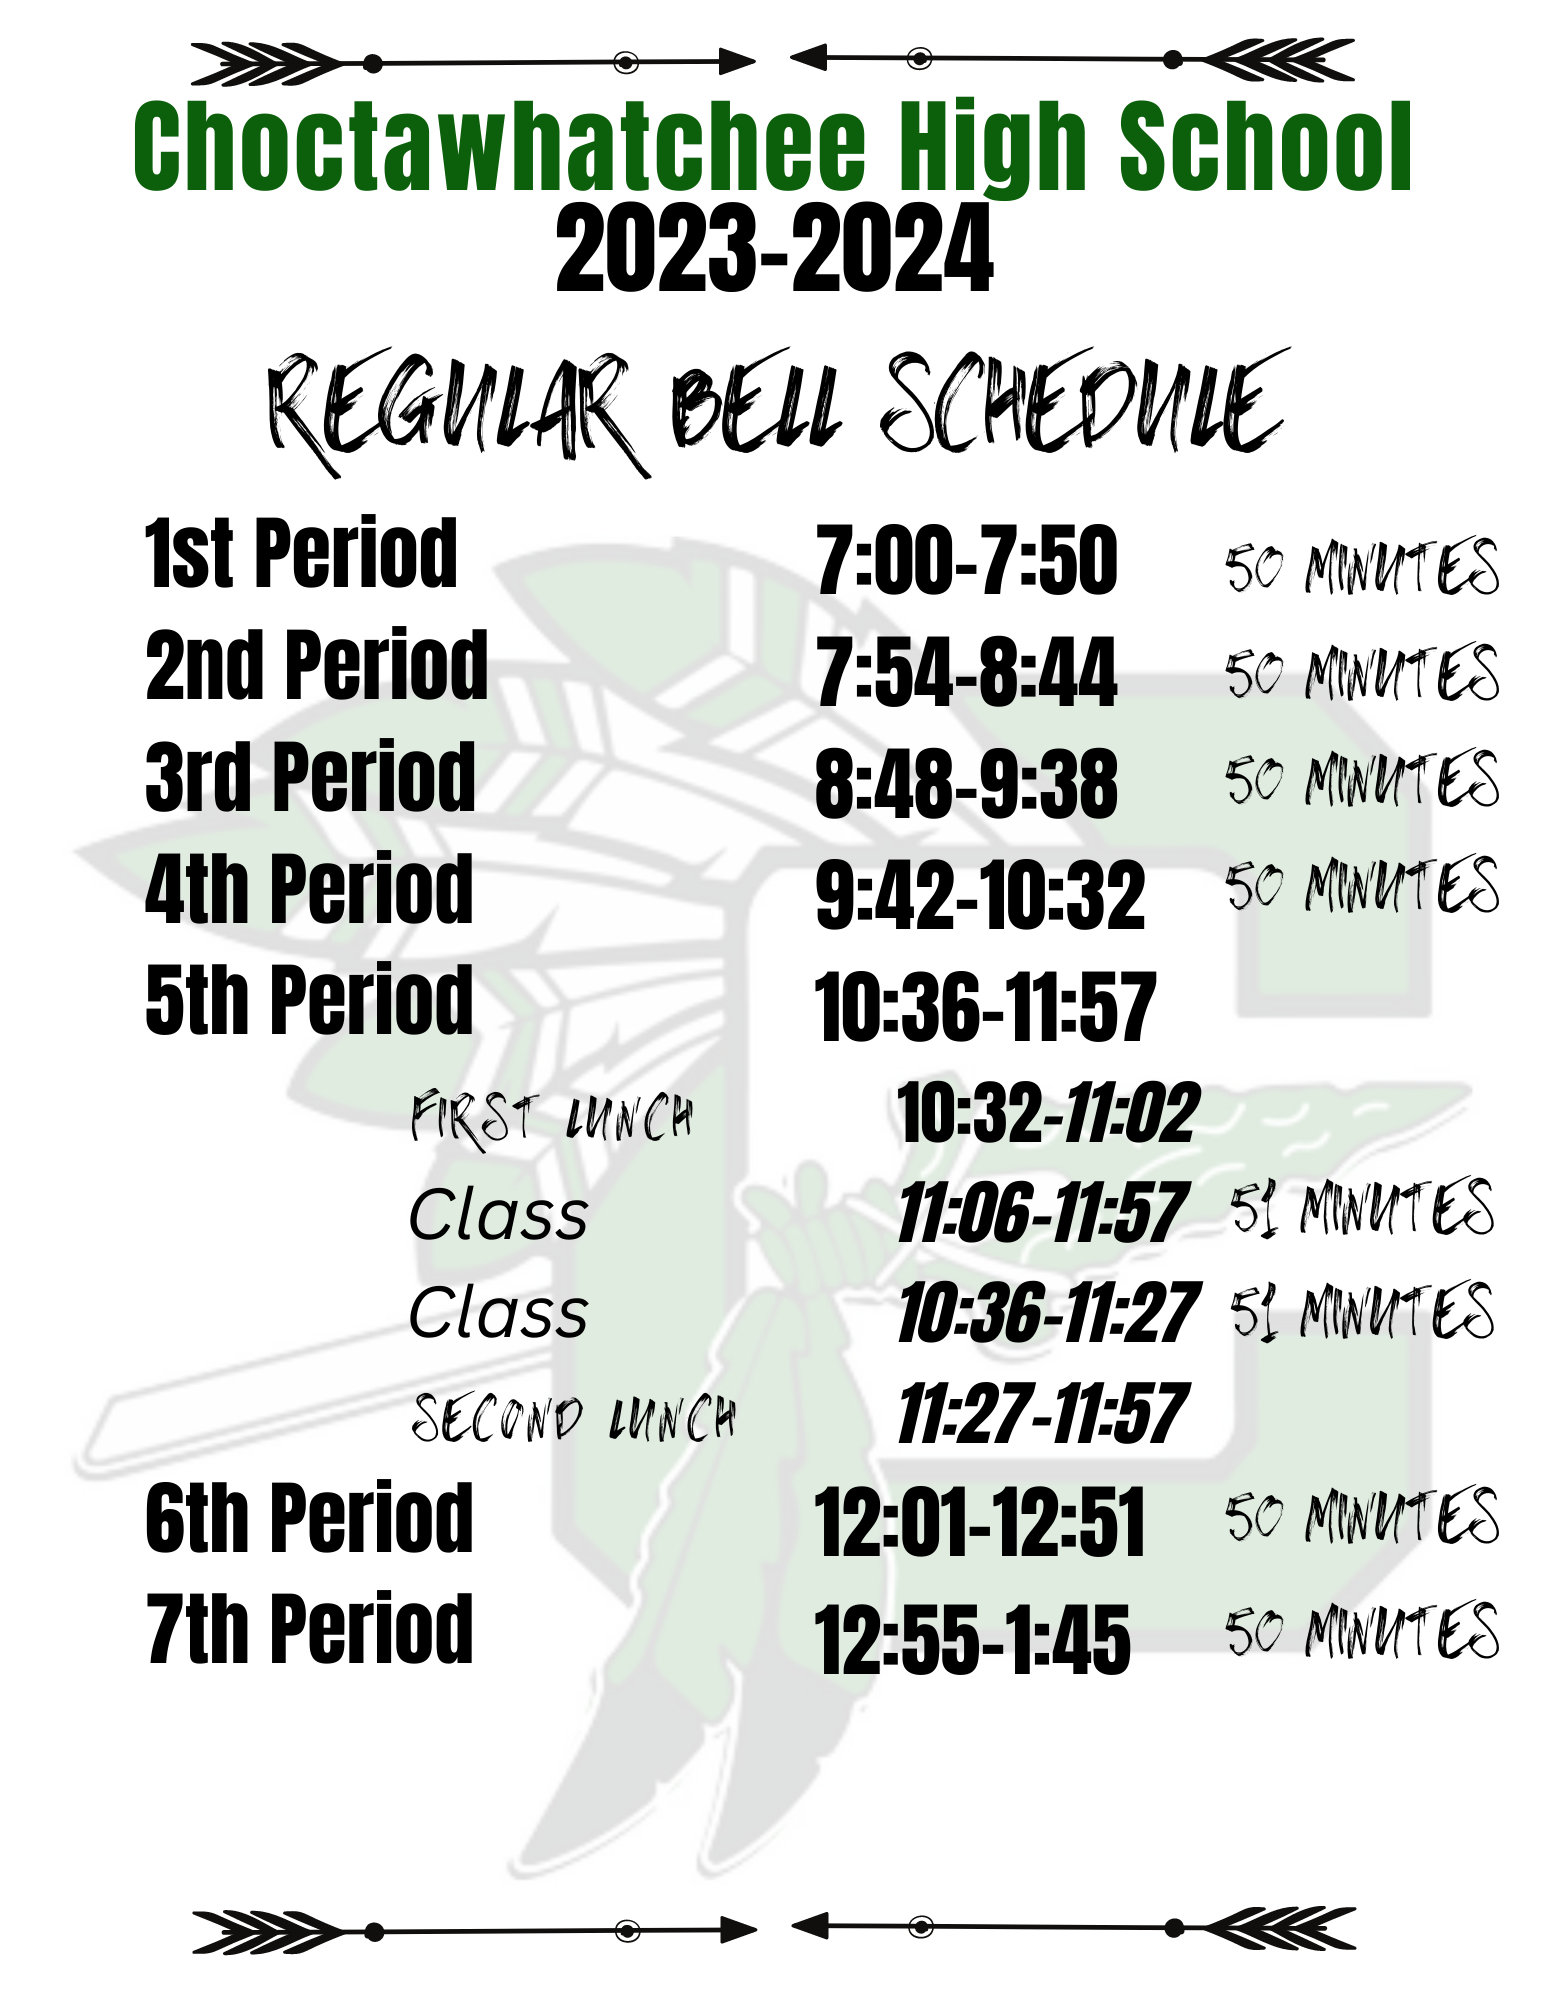 regular bell schedule